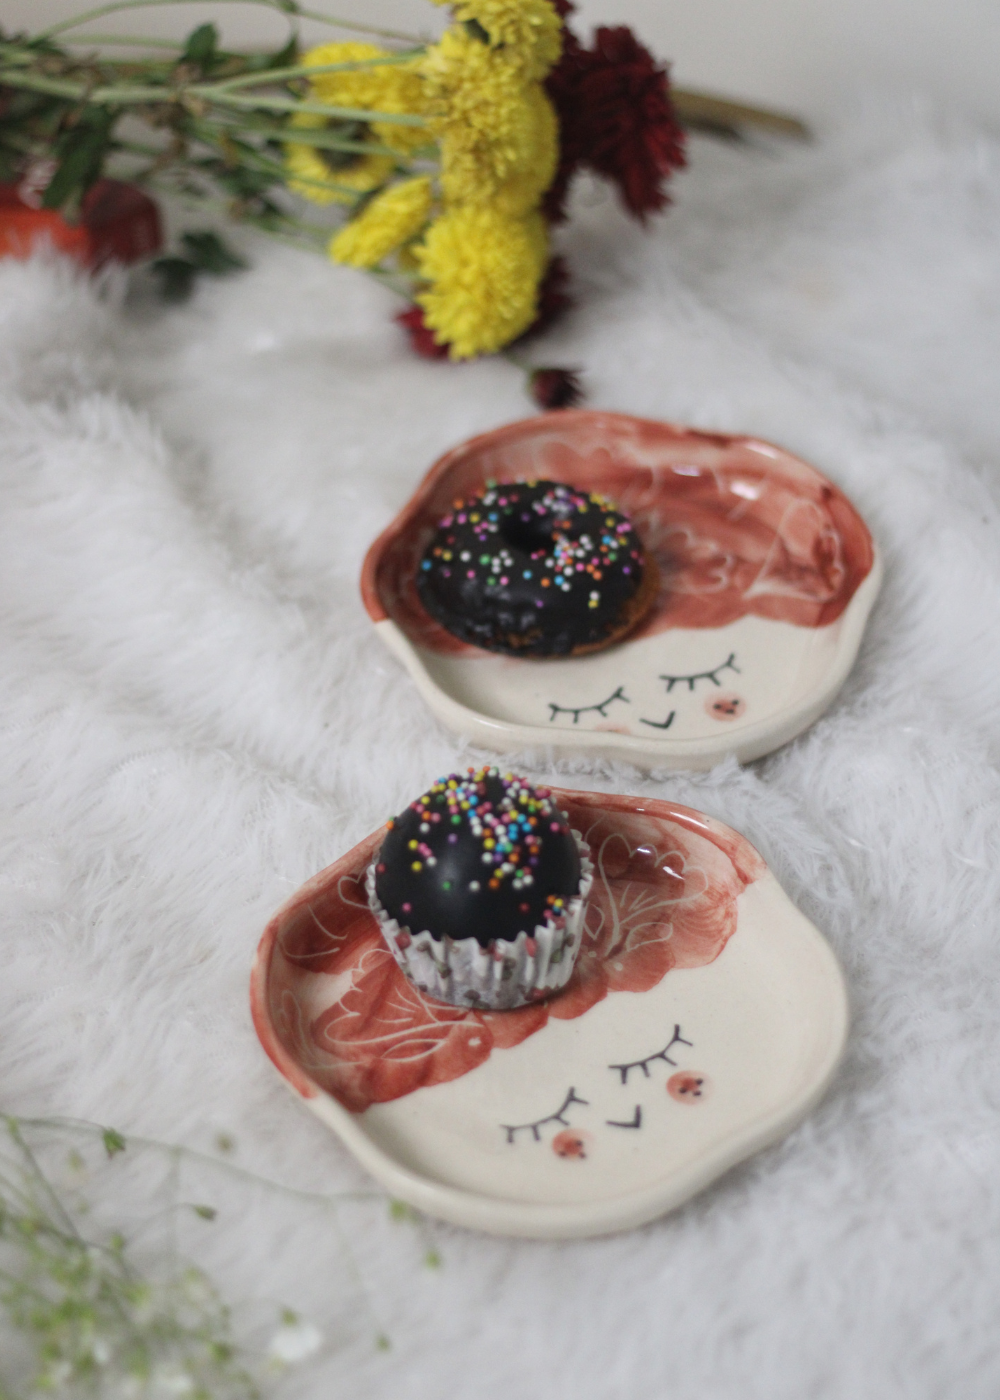 Two ceramic dessert plates with dessert